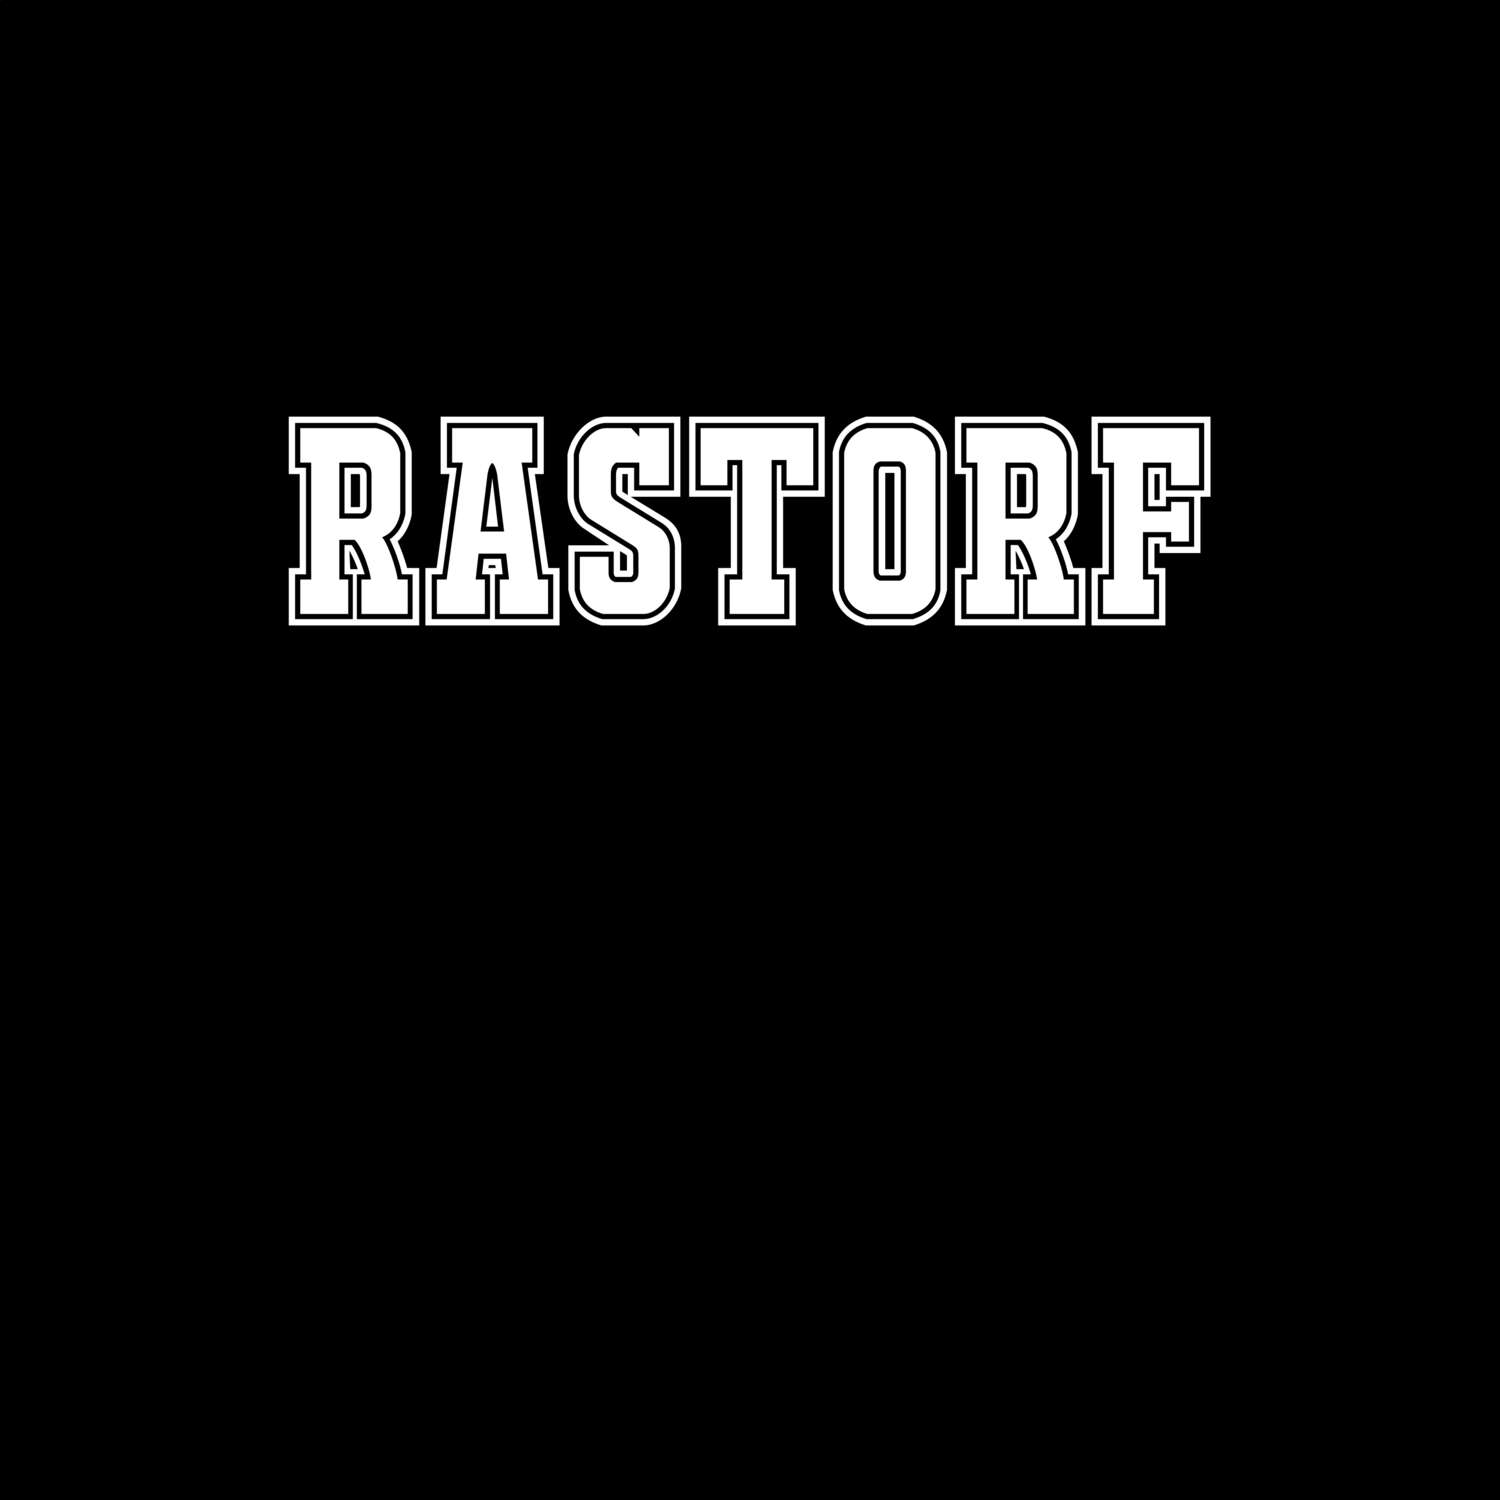 Rastorf T-Shirt »Classic«